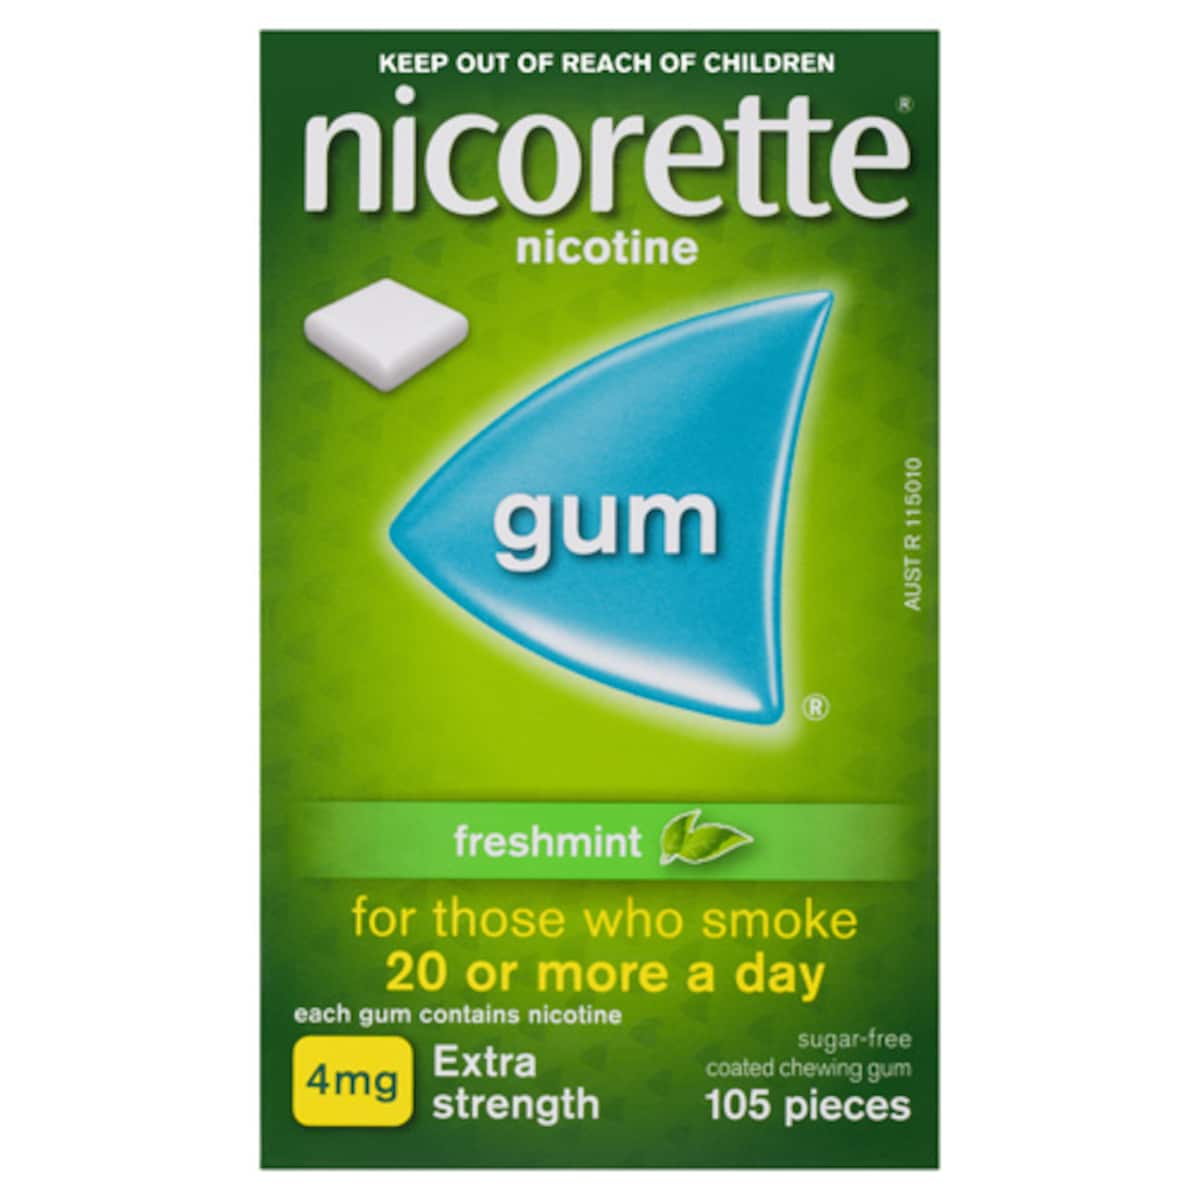 Nicorette Quit Smoking Nicotine Gum 4mg Fresh Mint 105 Pieces